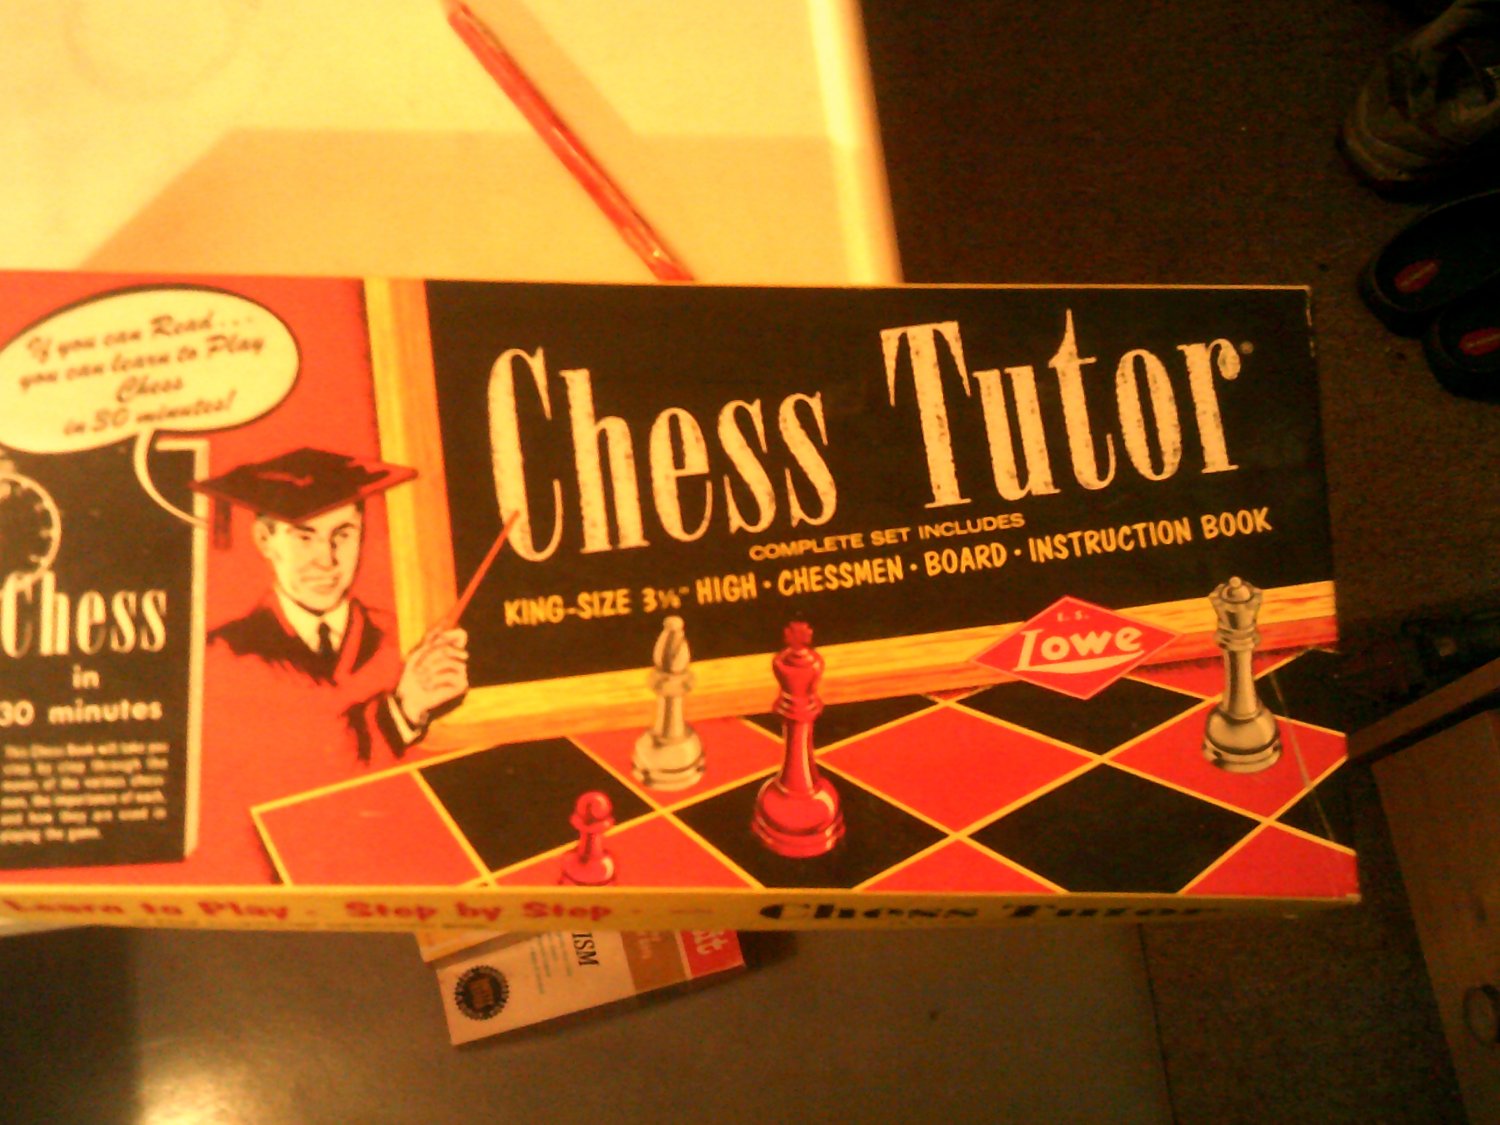 Chess Tutor by Lowe 1972